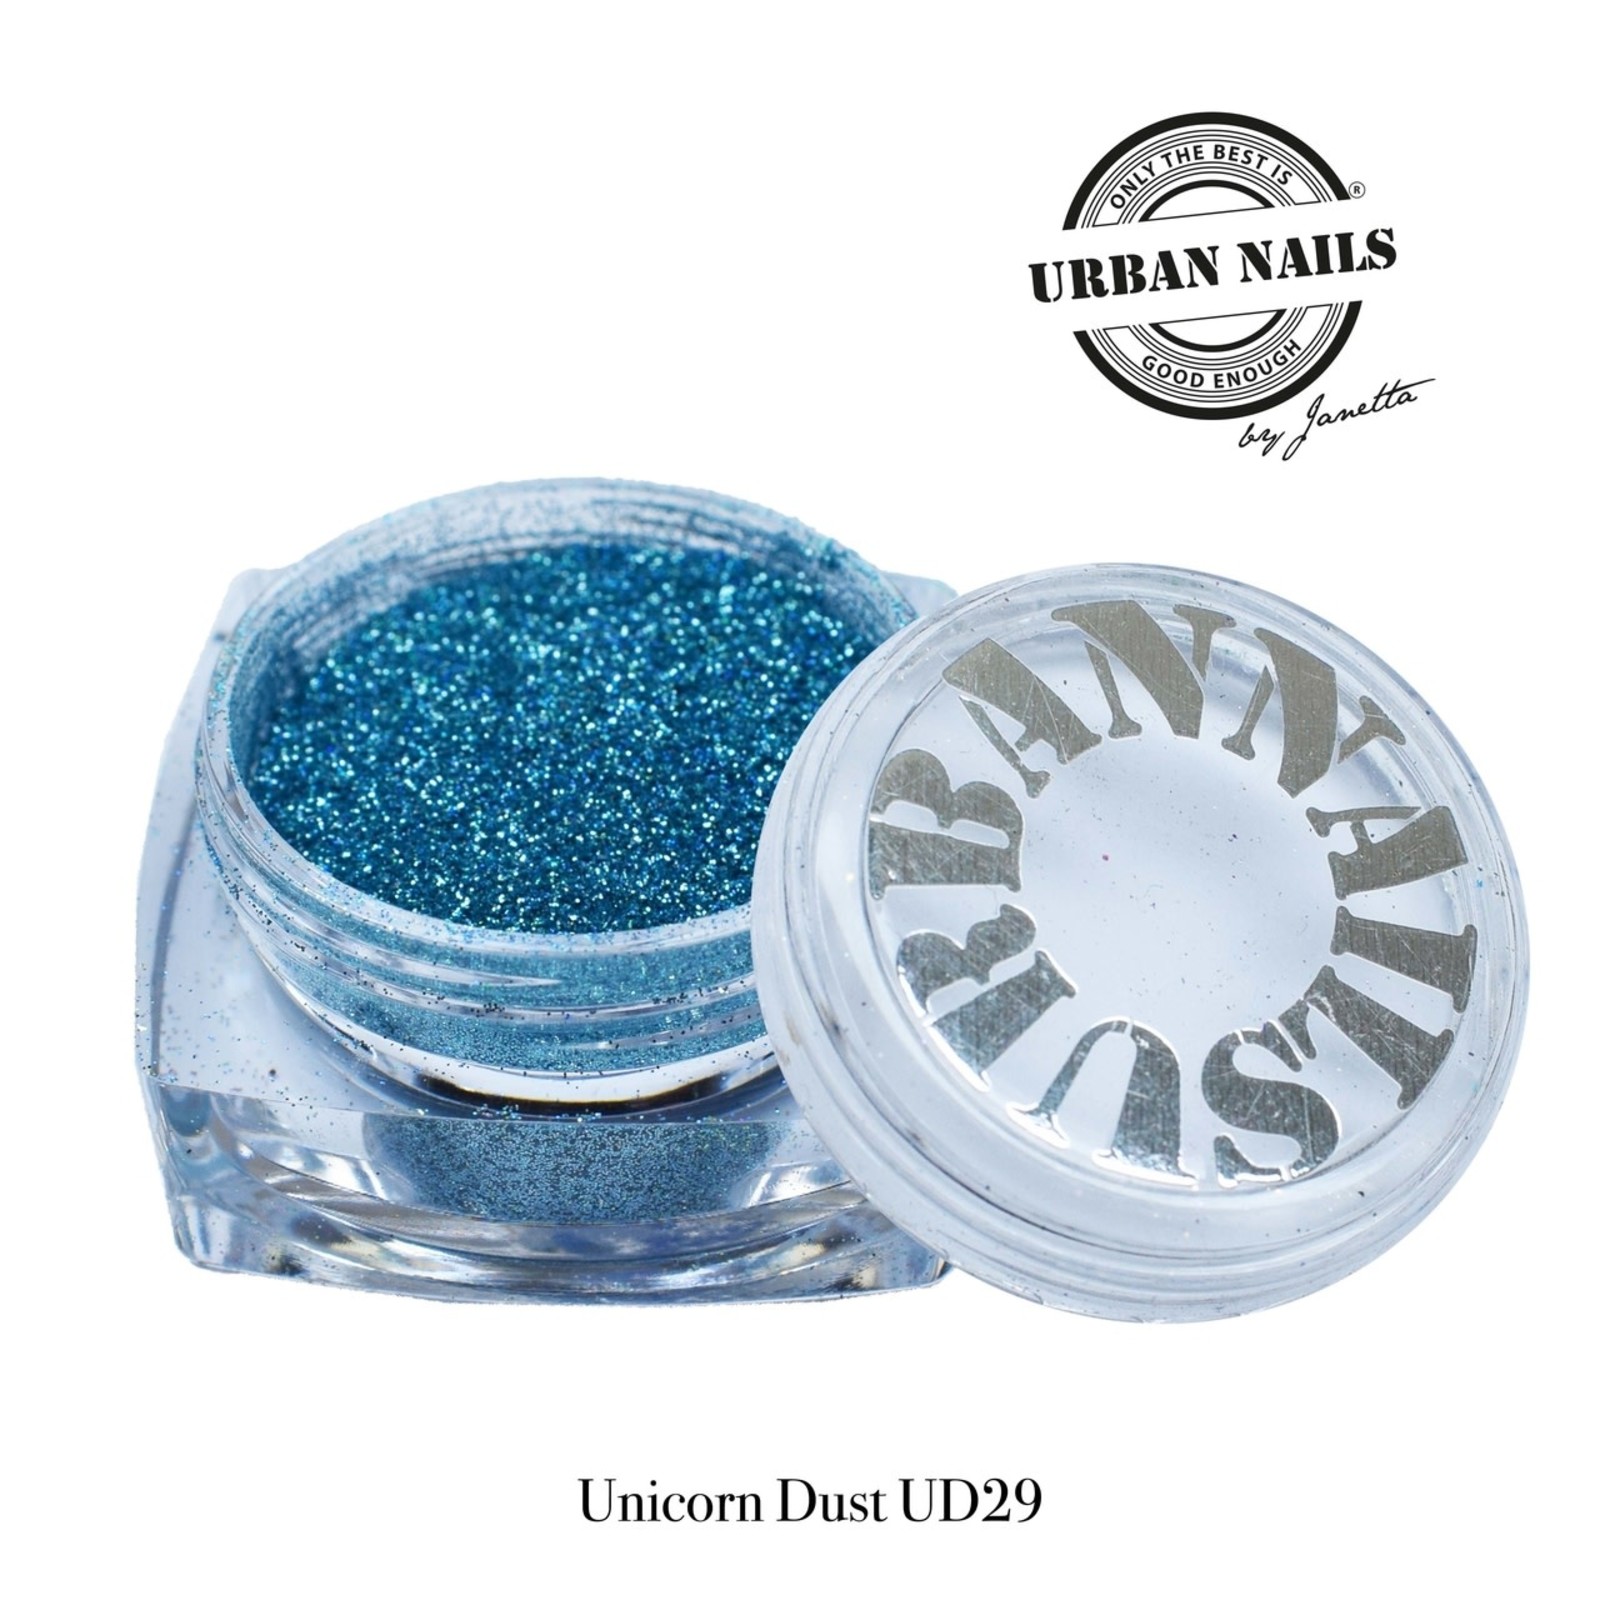 Urban nails Unicorn Dust UD29